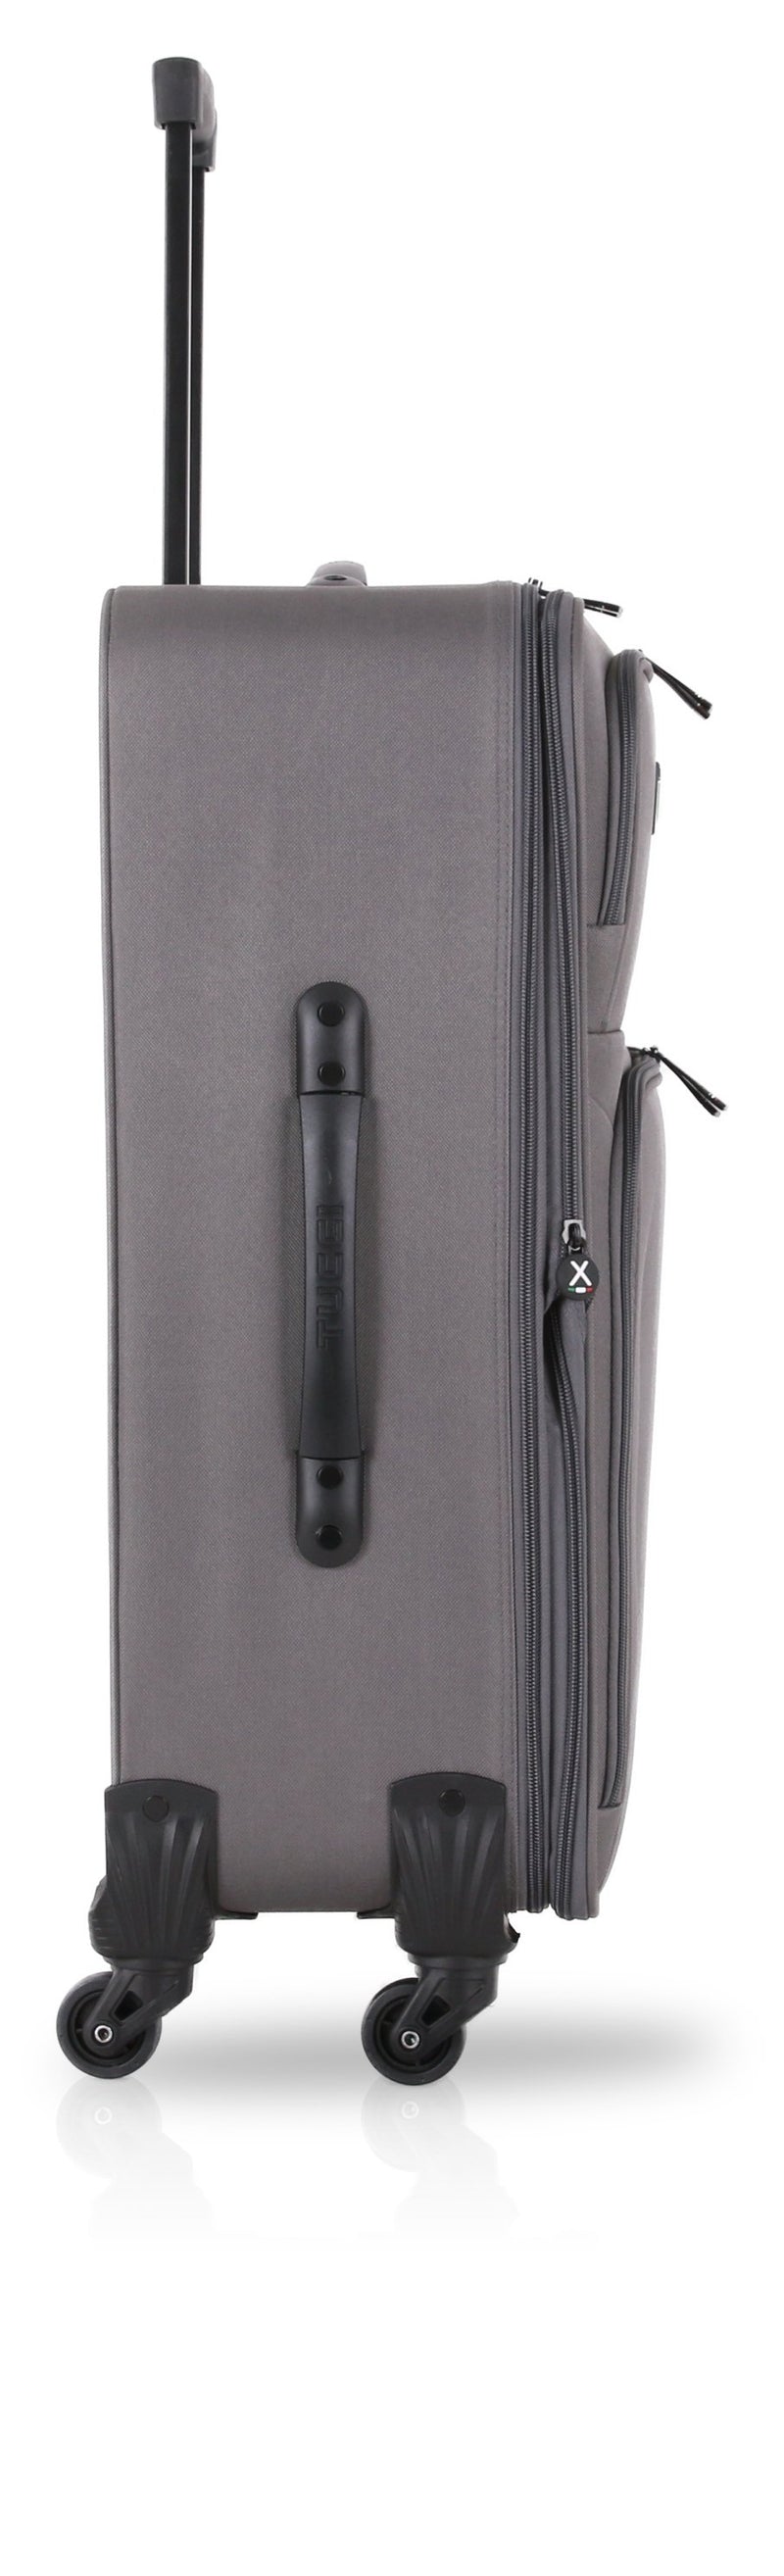 TUCCI Italy DISINVOLTA Fabric 3 PC (20", 24", 28") Luggage Suitcase Set